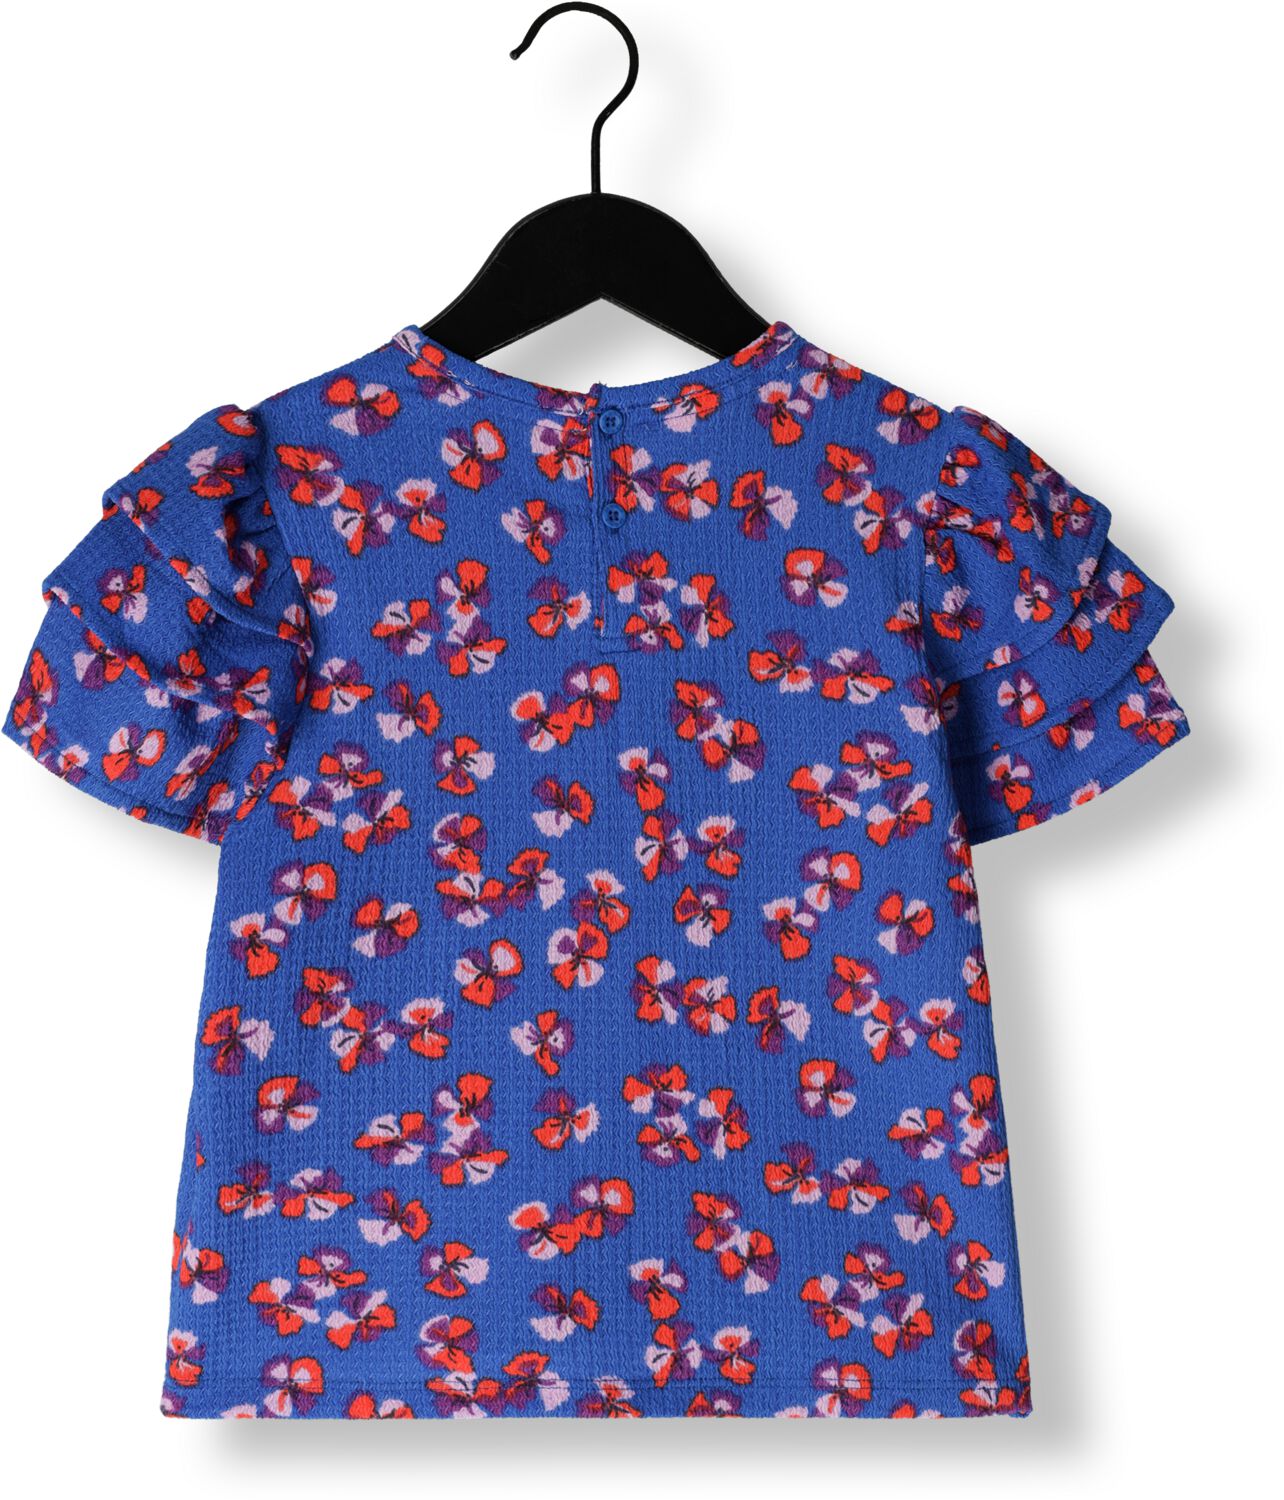 Z8 Meisjes Tops & T-shirts Hue Blauw